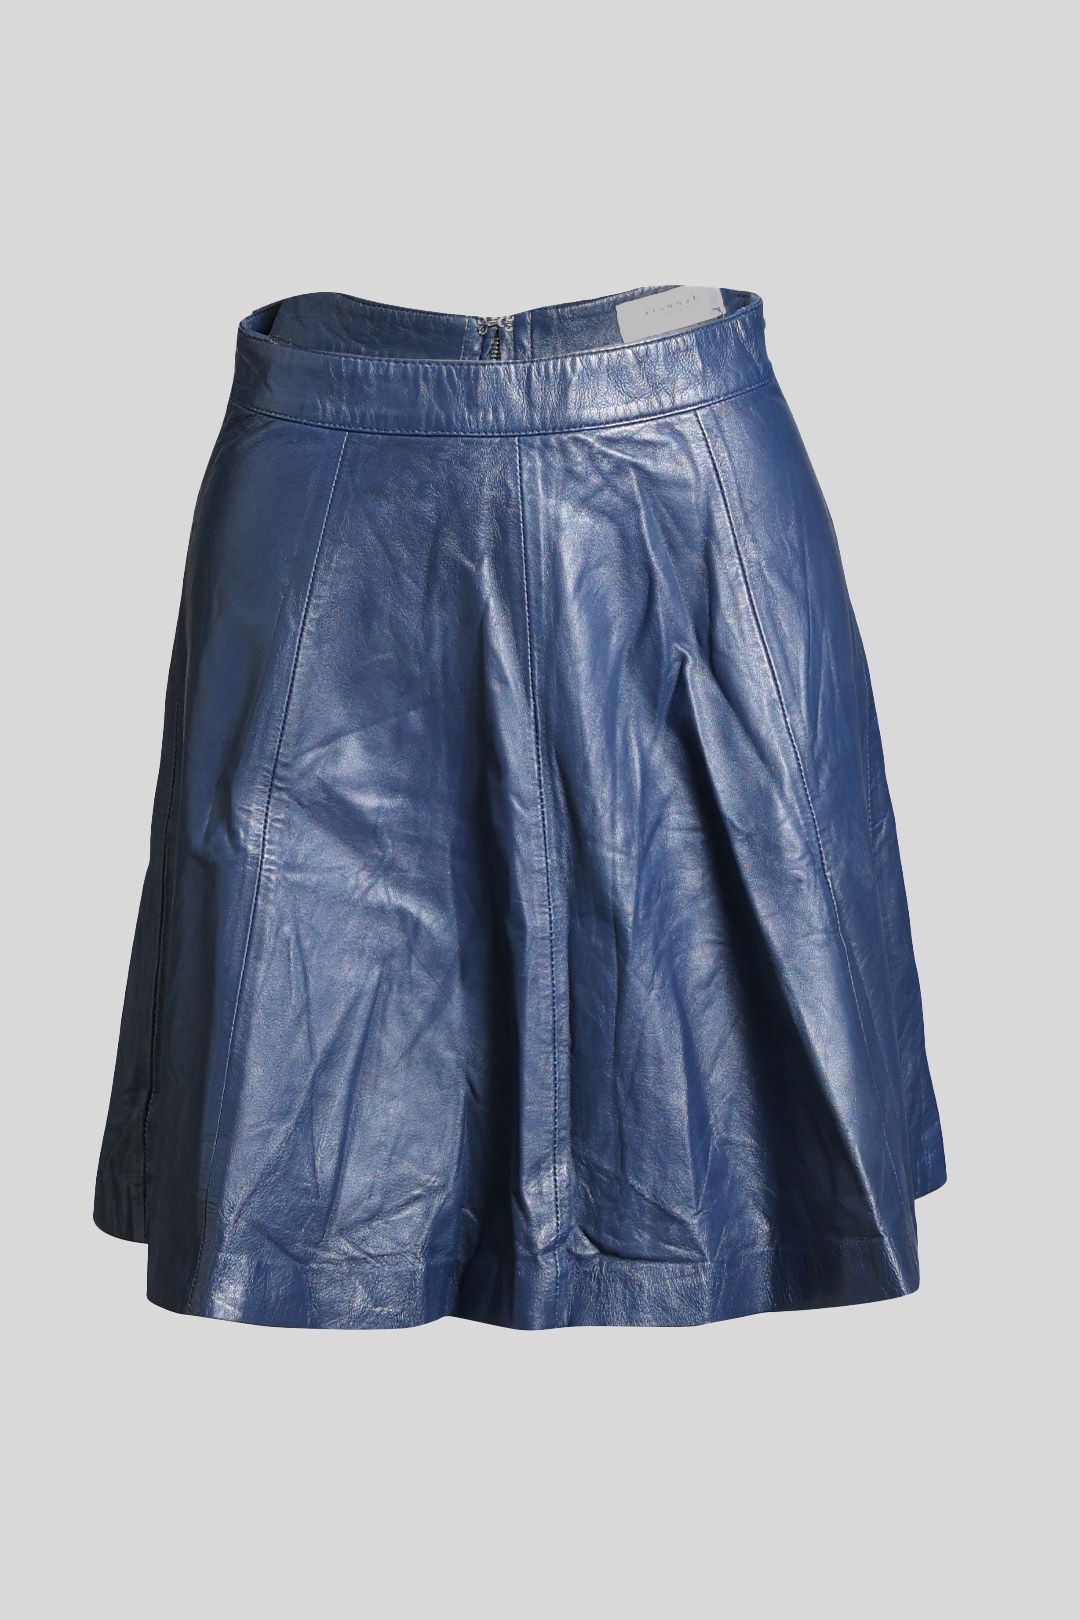 Alannah Hill - Blue Leather Skater Mini Skirt